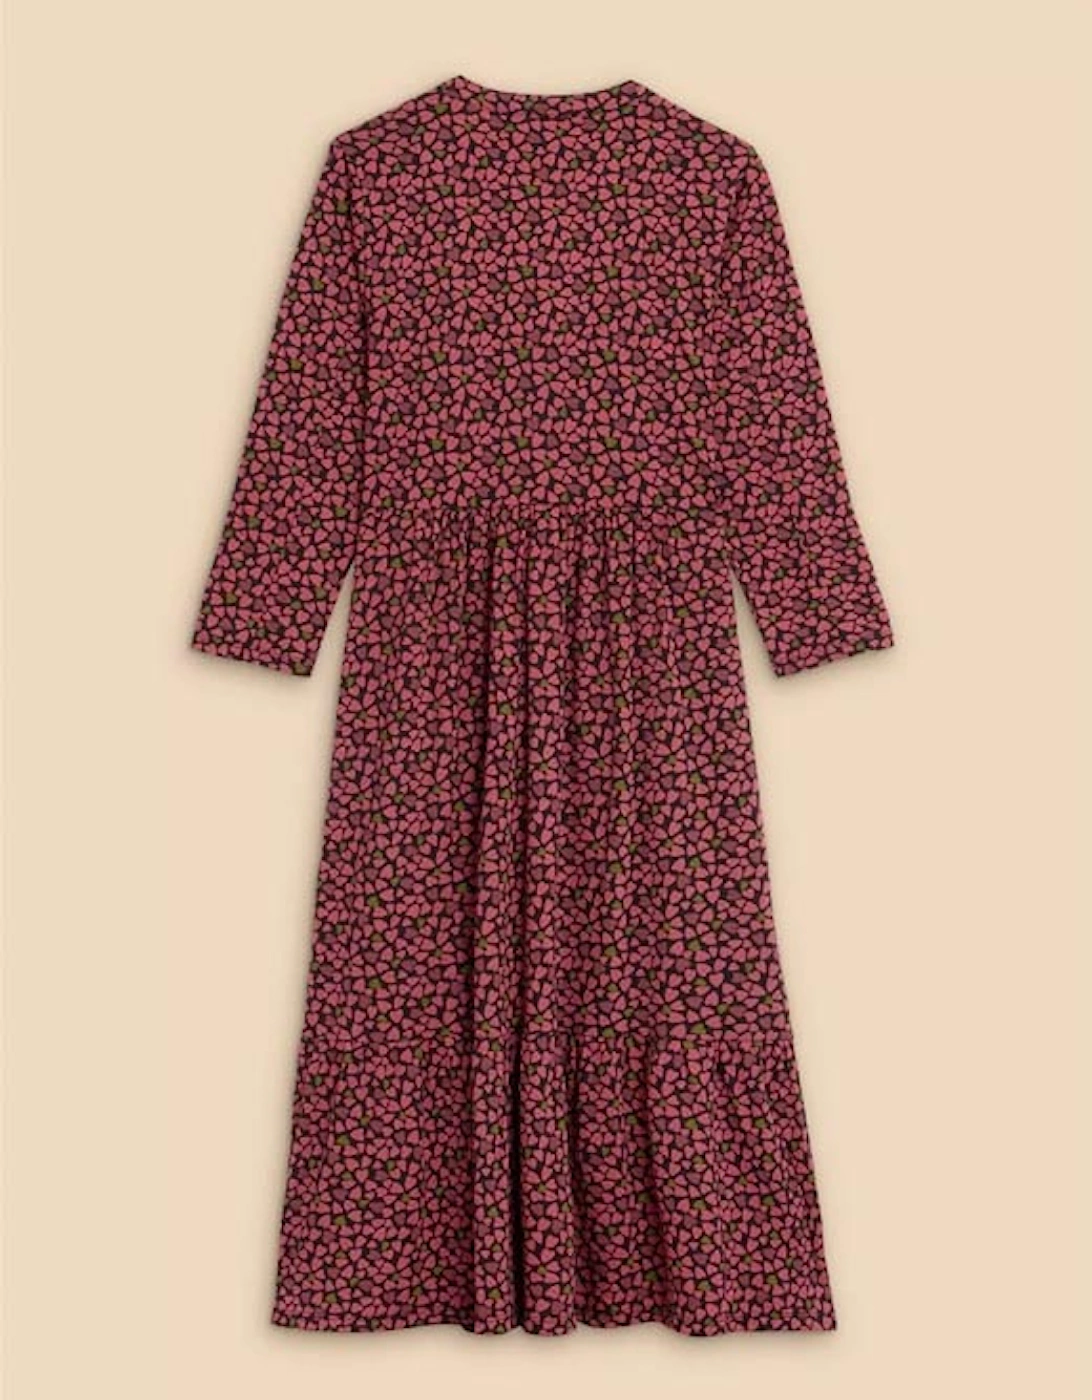 Petite Women's Naya Jersey Dress Pink Print